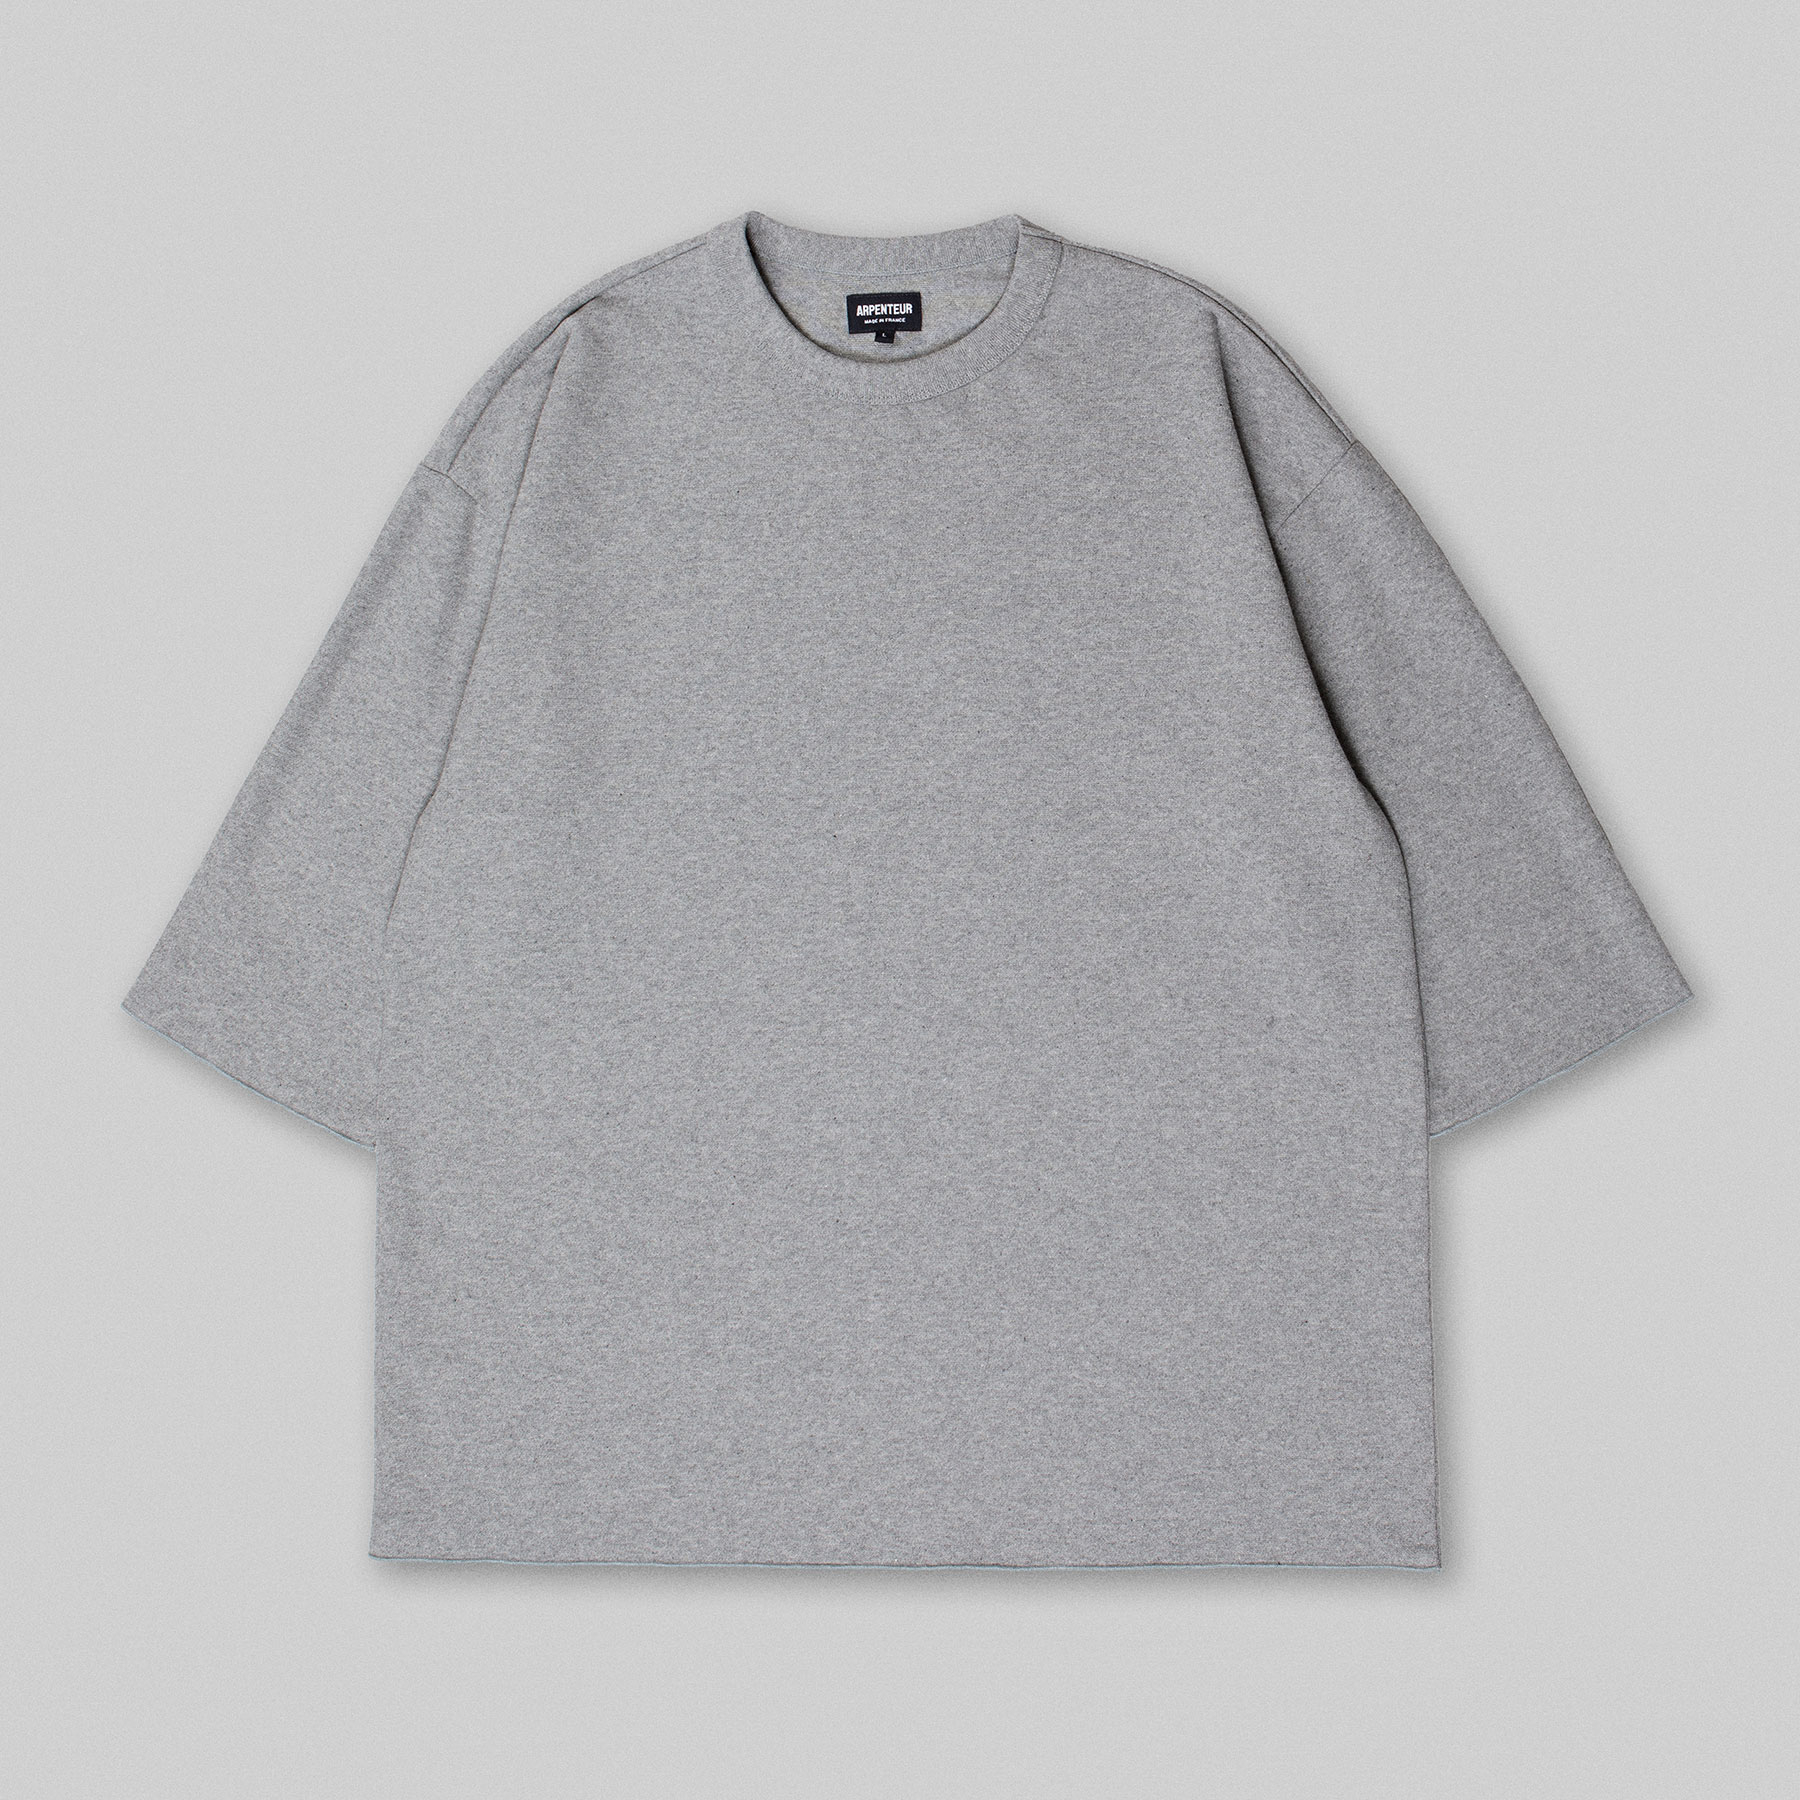 MARINIERE t-shirt by Arpenteur in Melange grey color